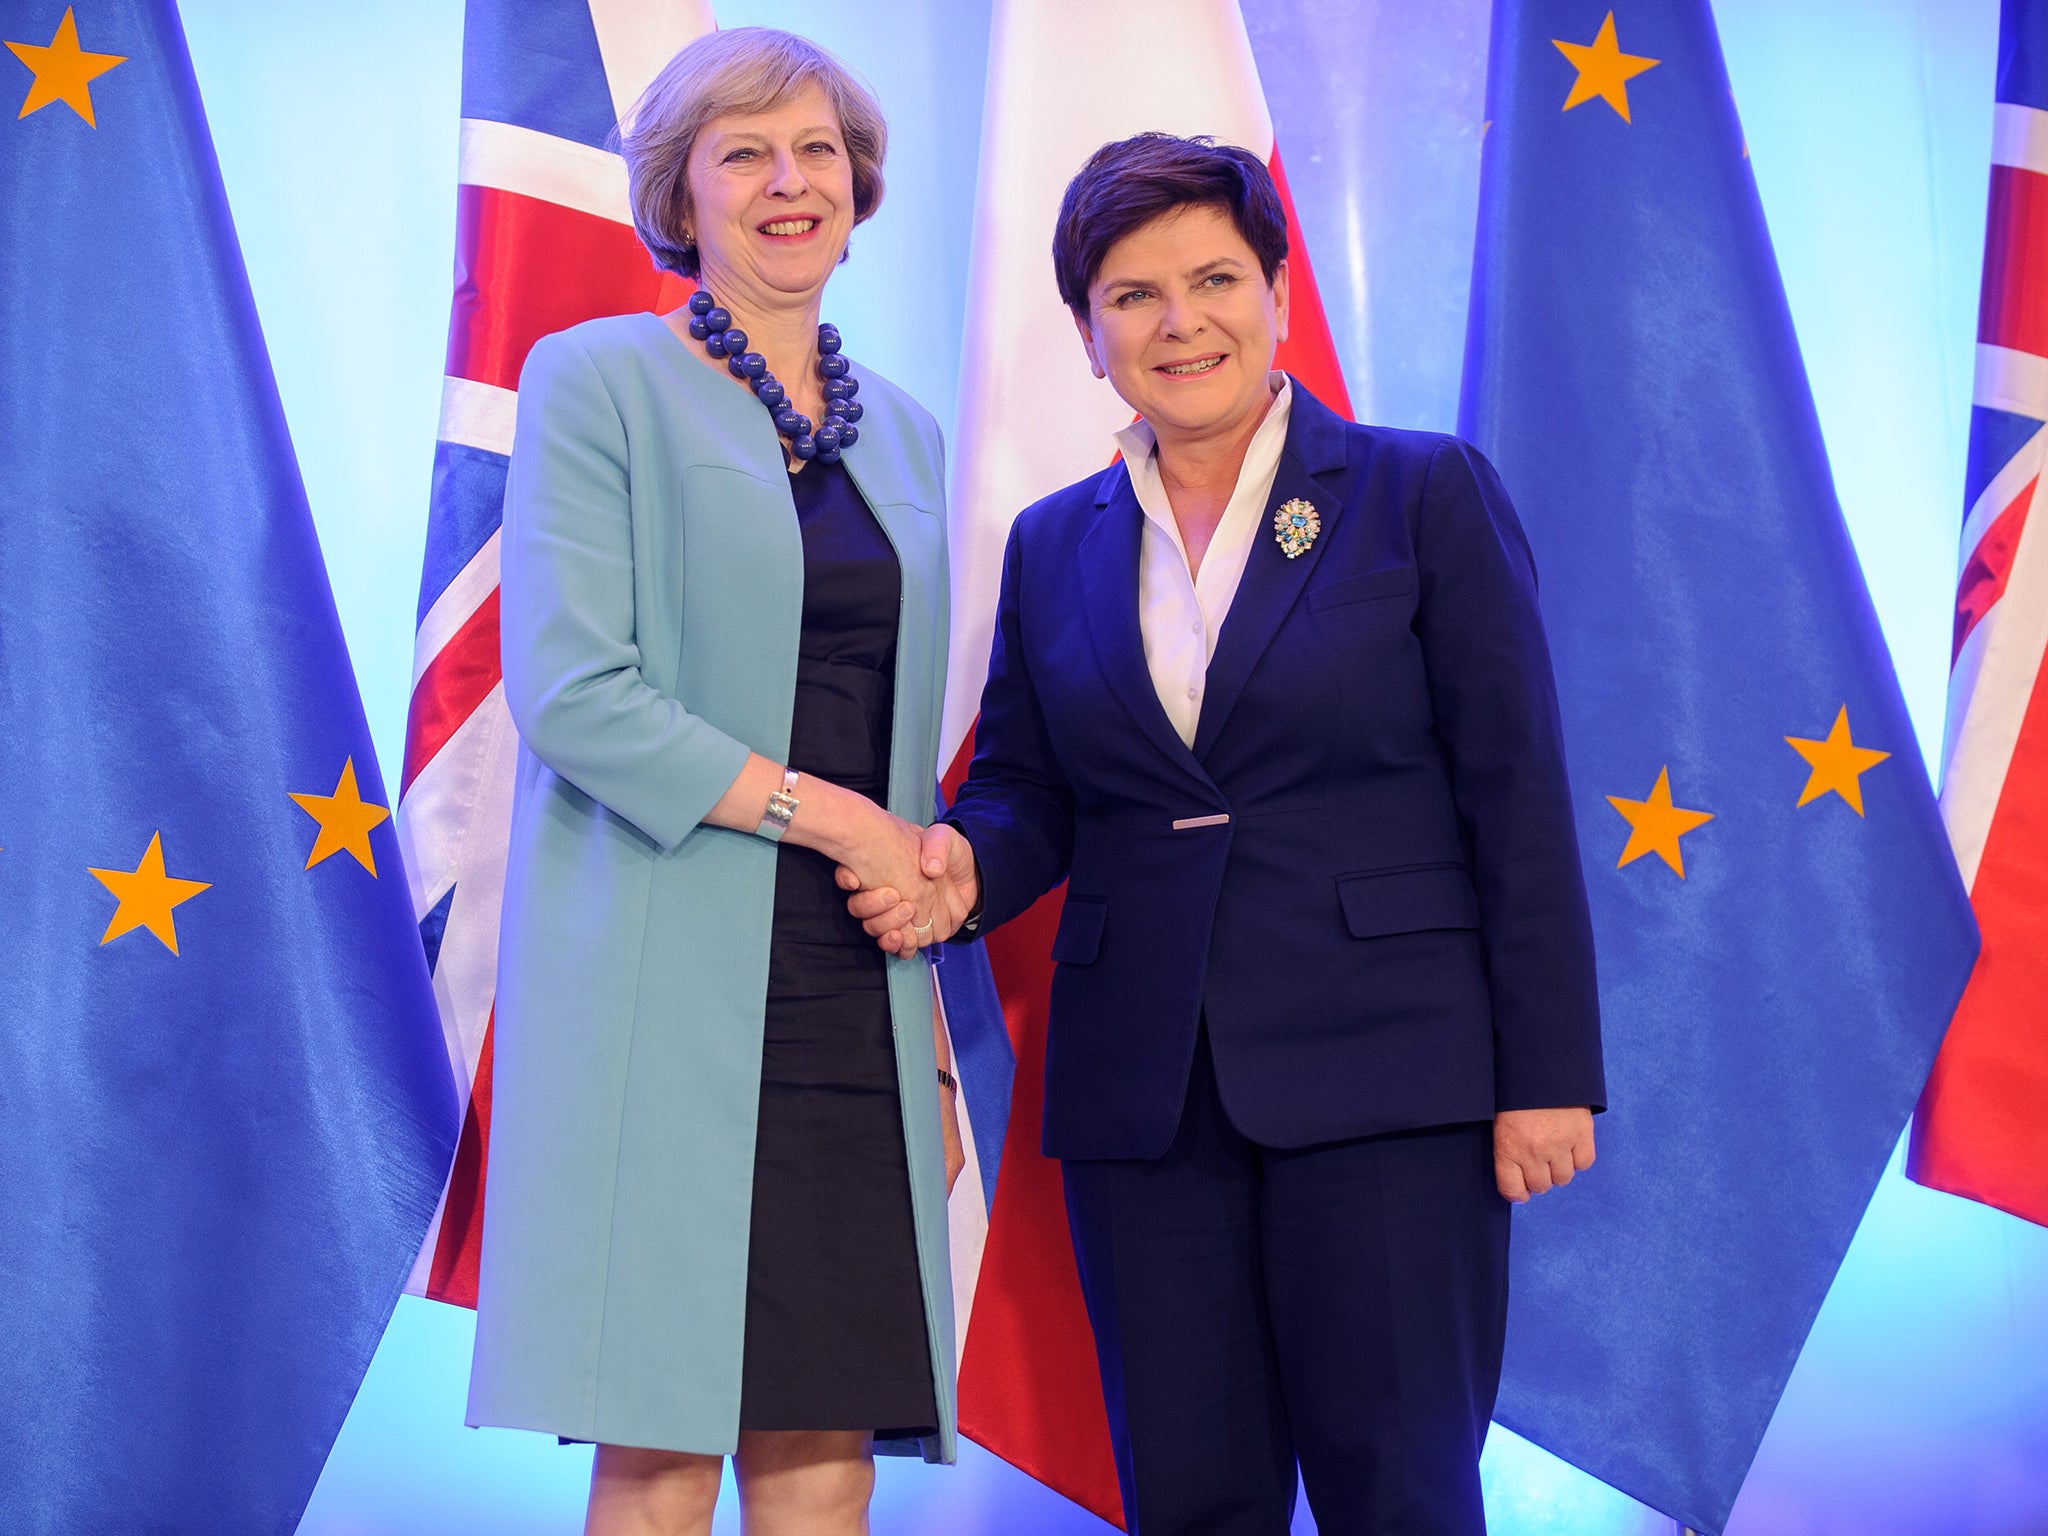 British Prime Minister Theresa May and Polish Prime Minister Beata Szydlo